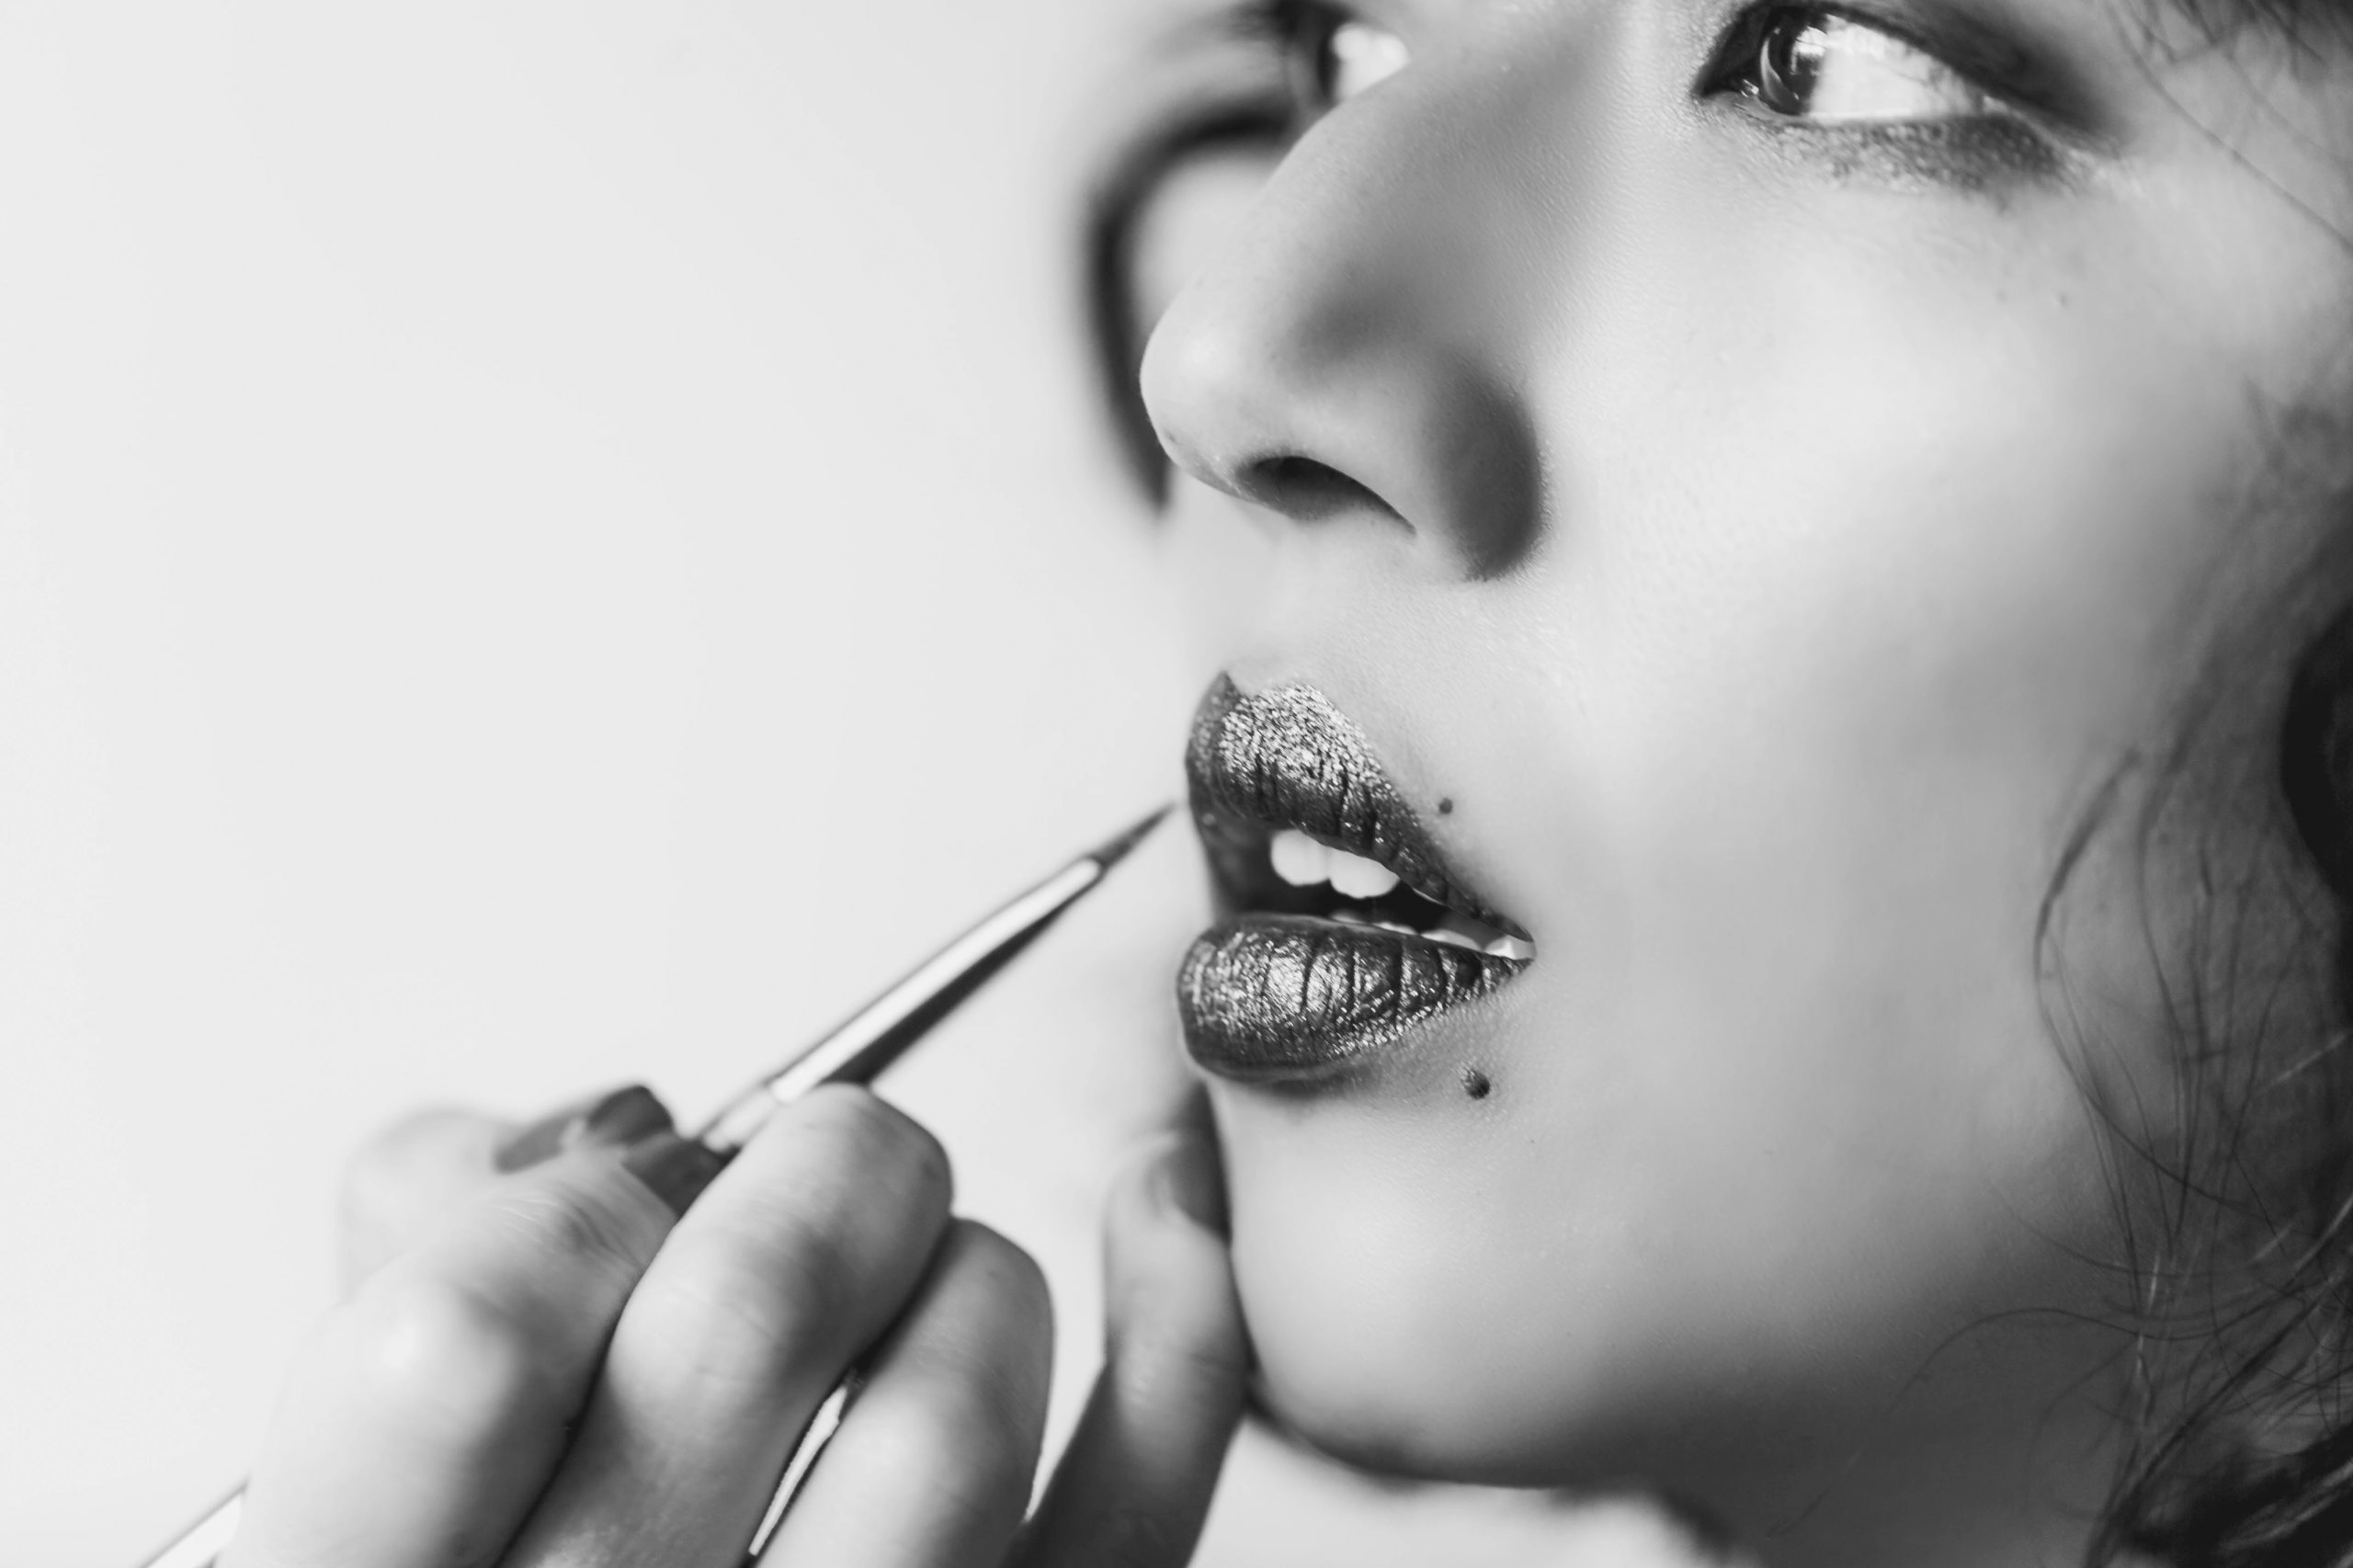 https://www.gutenberg.agency/wp-content/uploads/2022/08/gutenberg-agency-content-factory-studio-photo-makeup-lipstick.webp